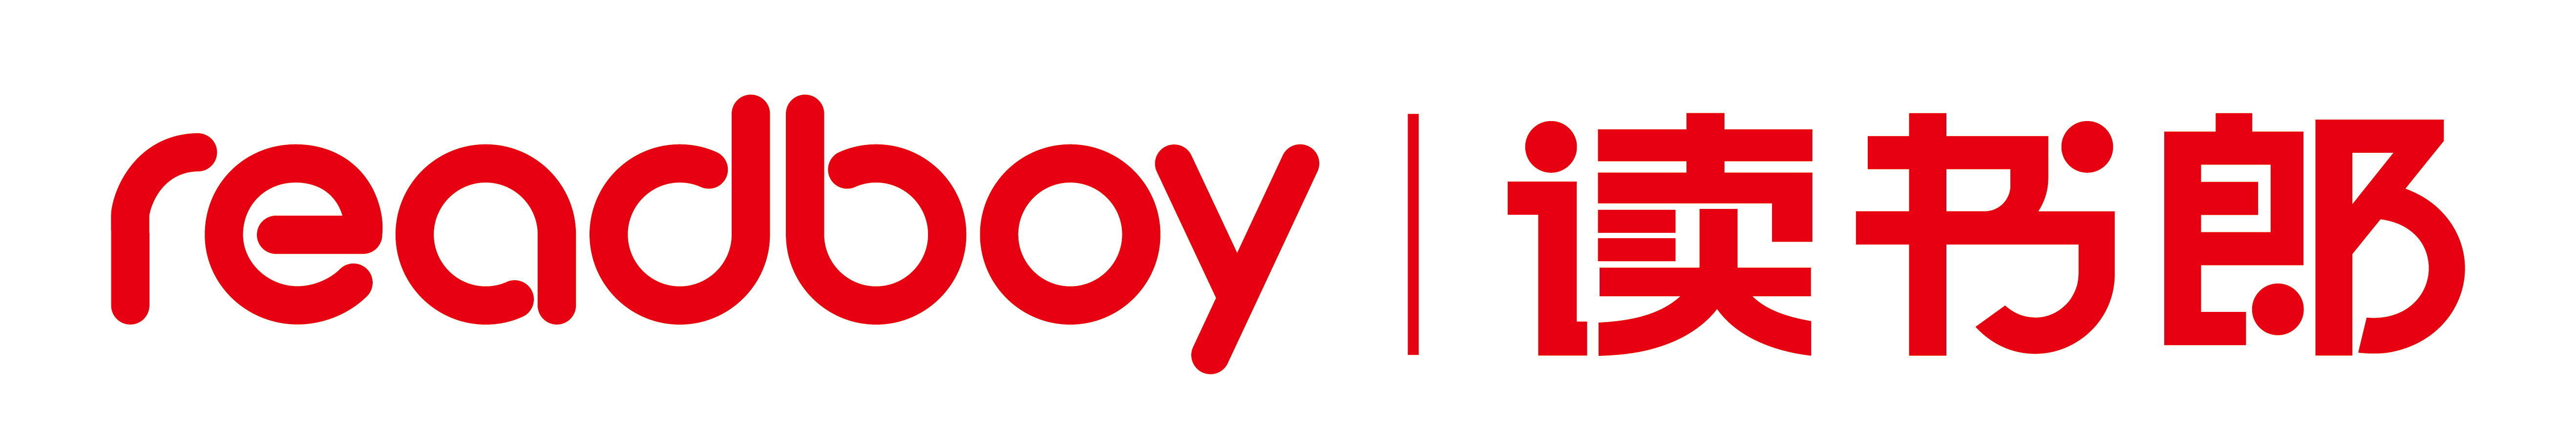 Readboy logo